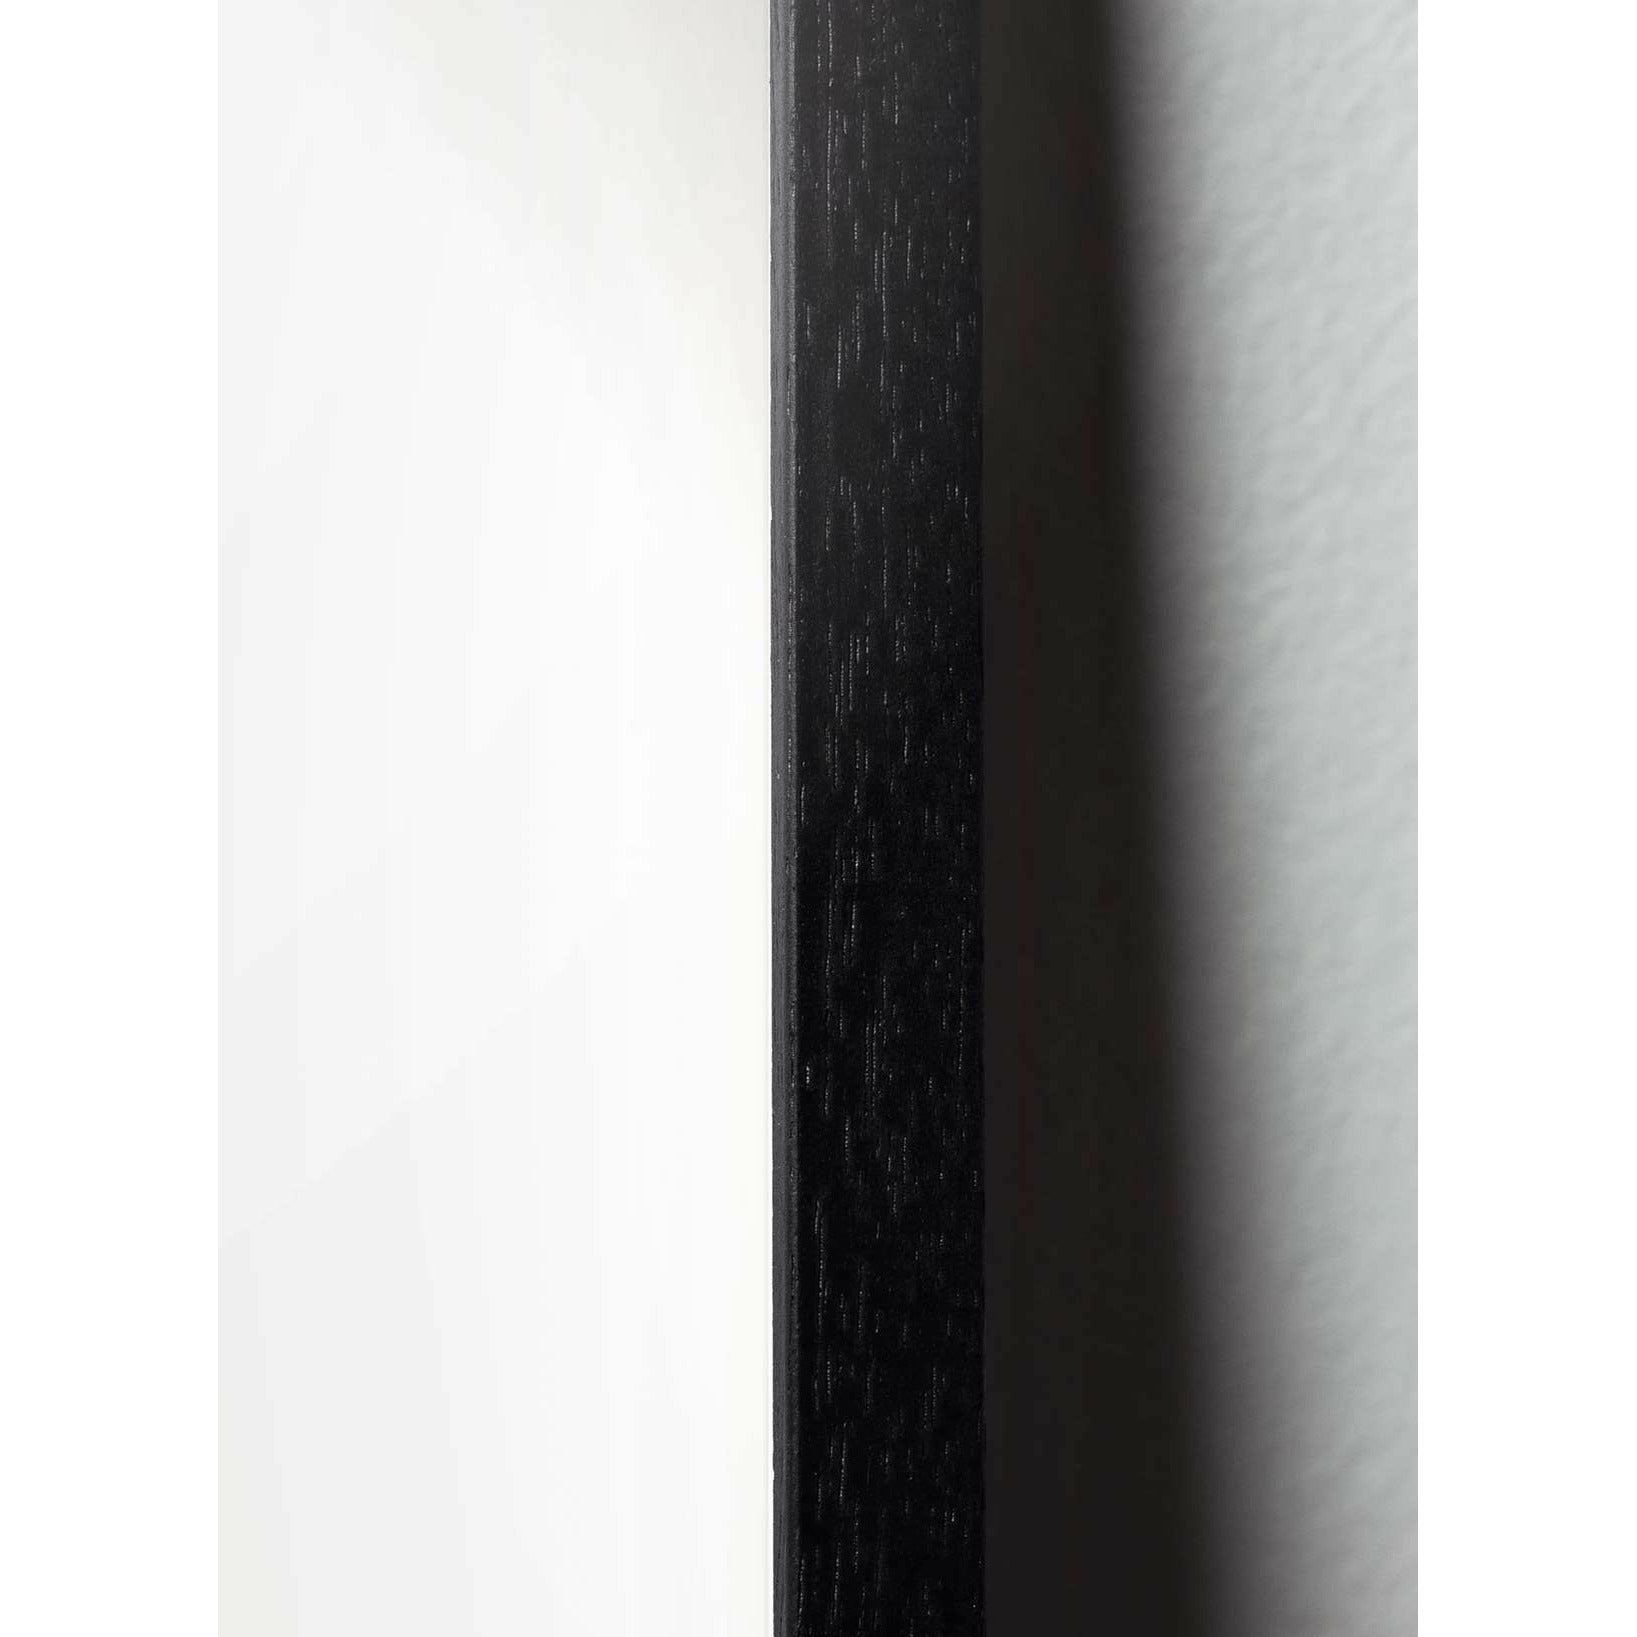 Brainchild Swan Stroke -affisch, ram i svart -målat trä 70x100 cm, vit bakgrund